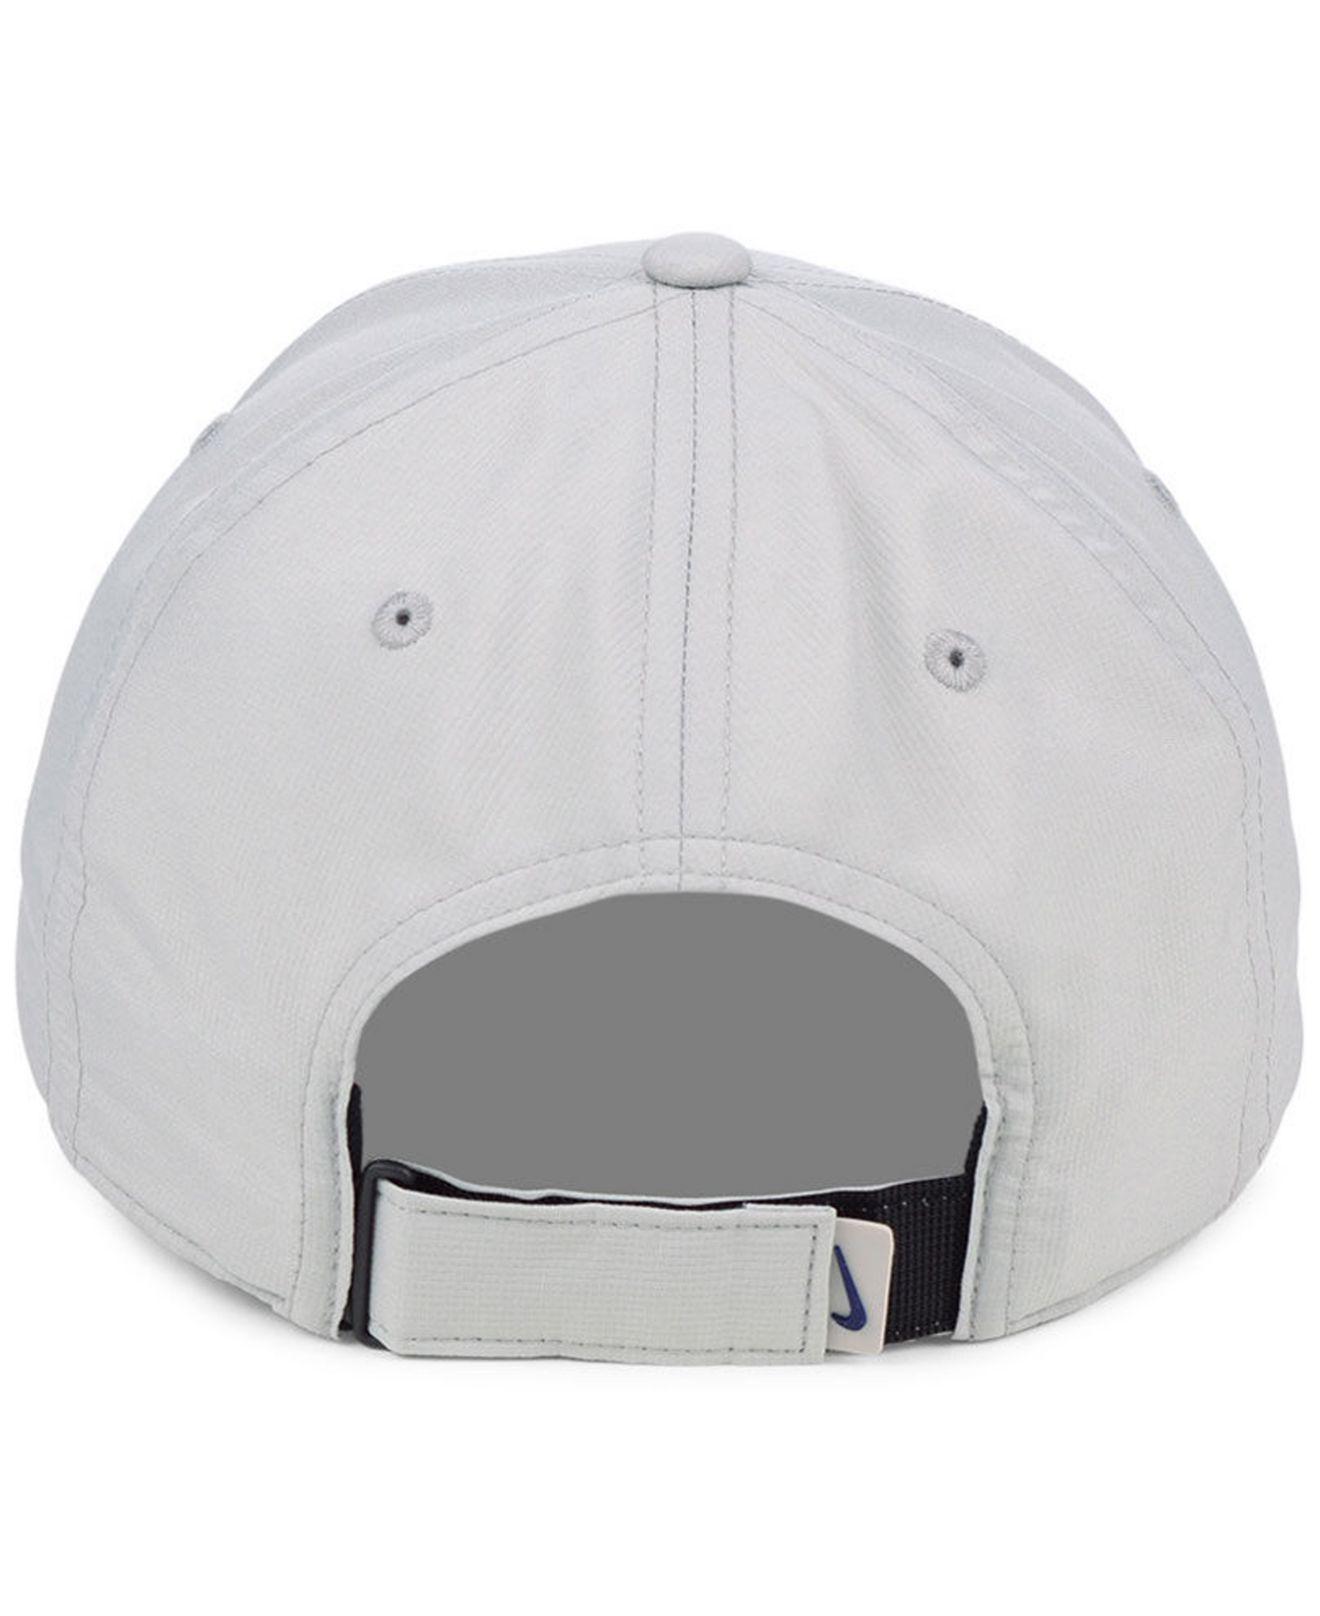 Houston Astros Primetime Pro Men's Nike Dri-FIT MLB Adjustable Hat